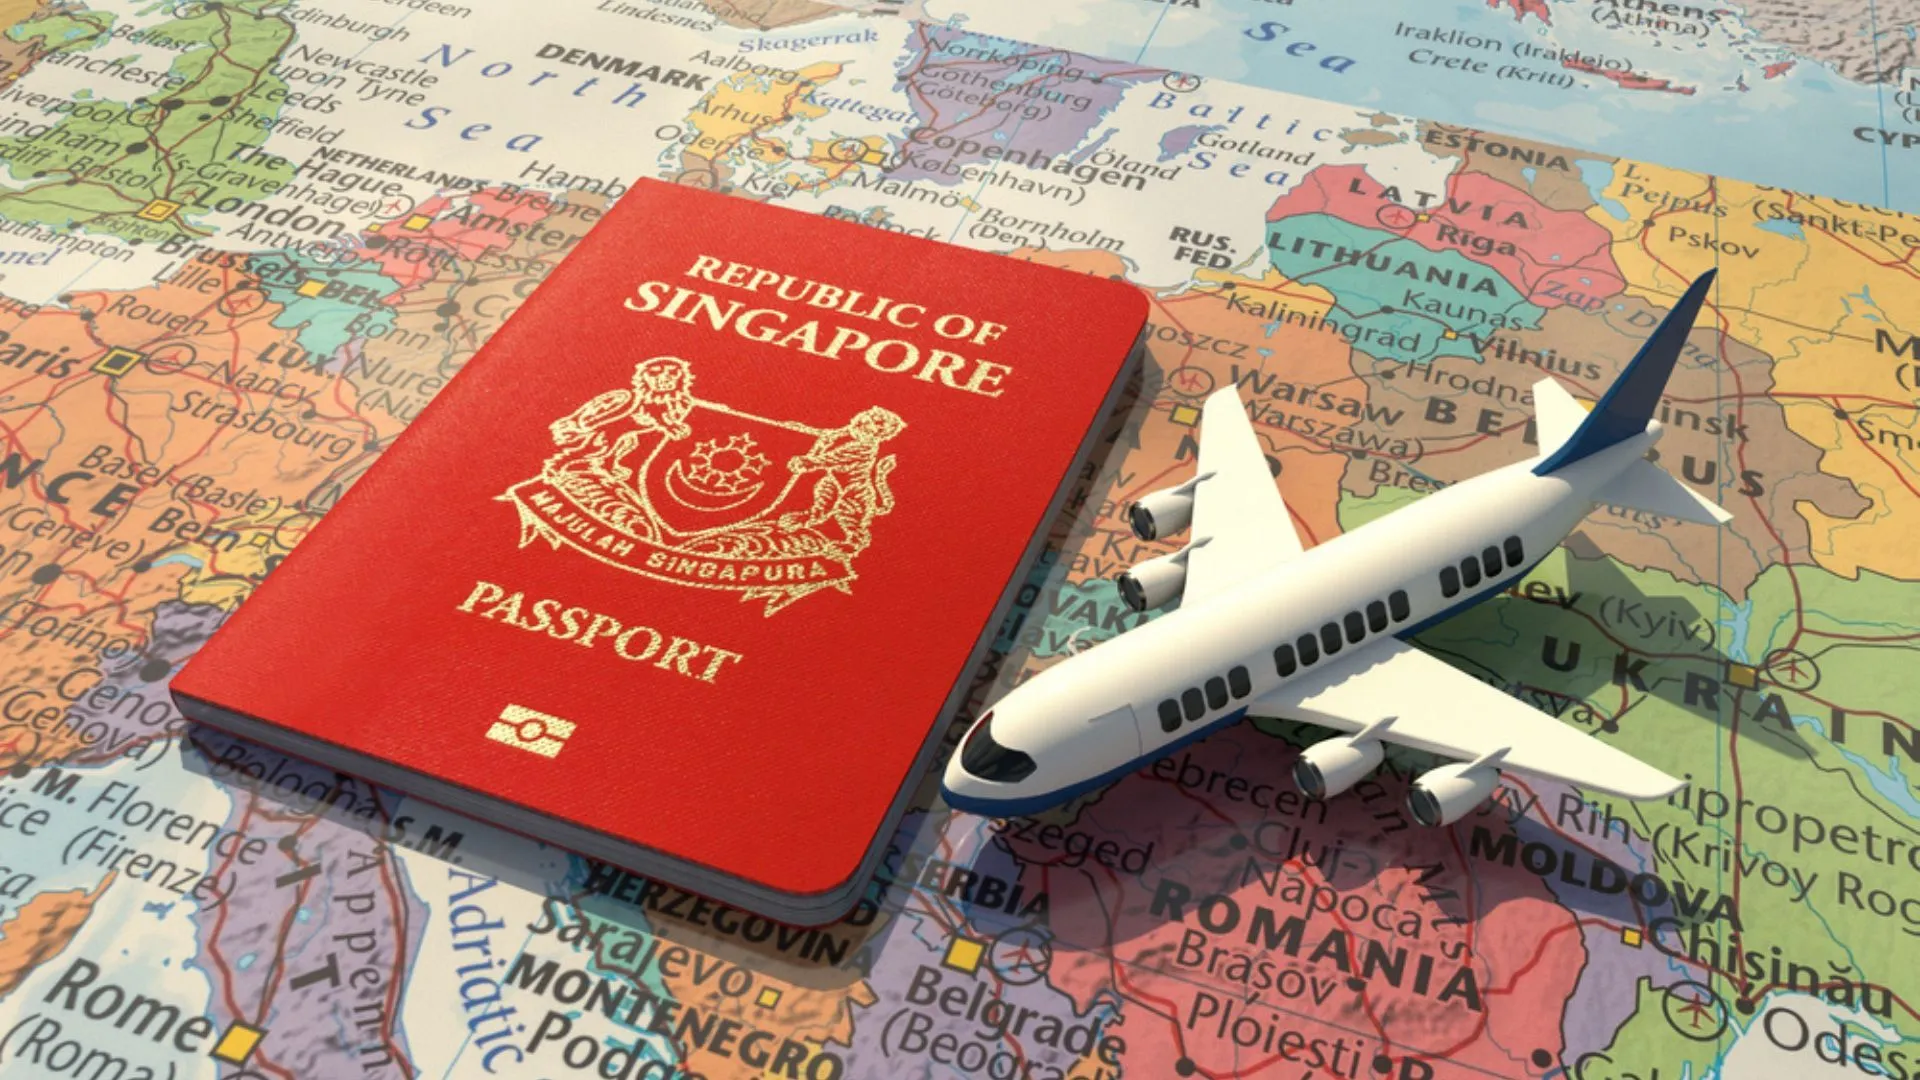 singapore-passport